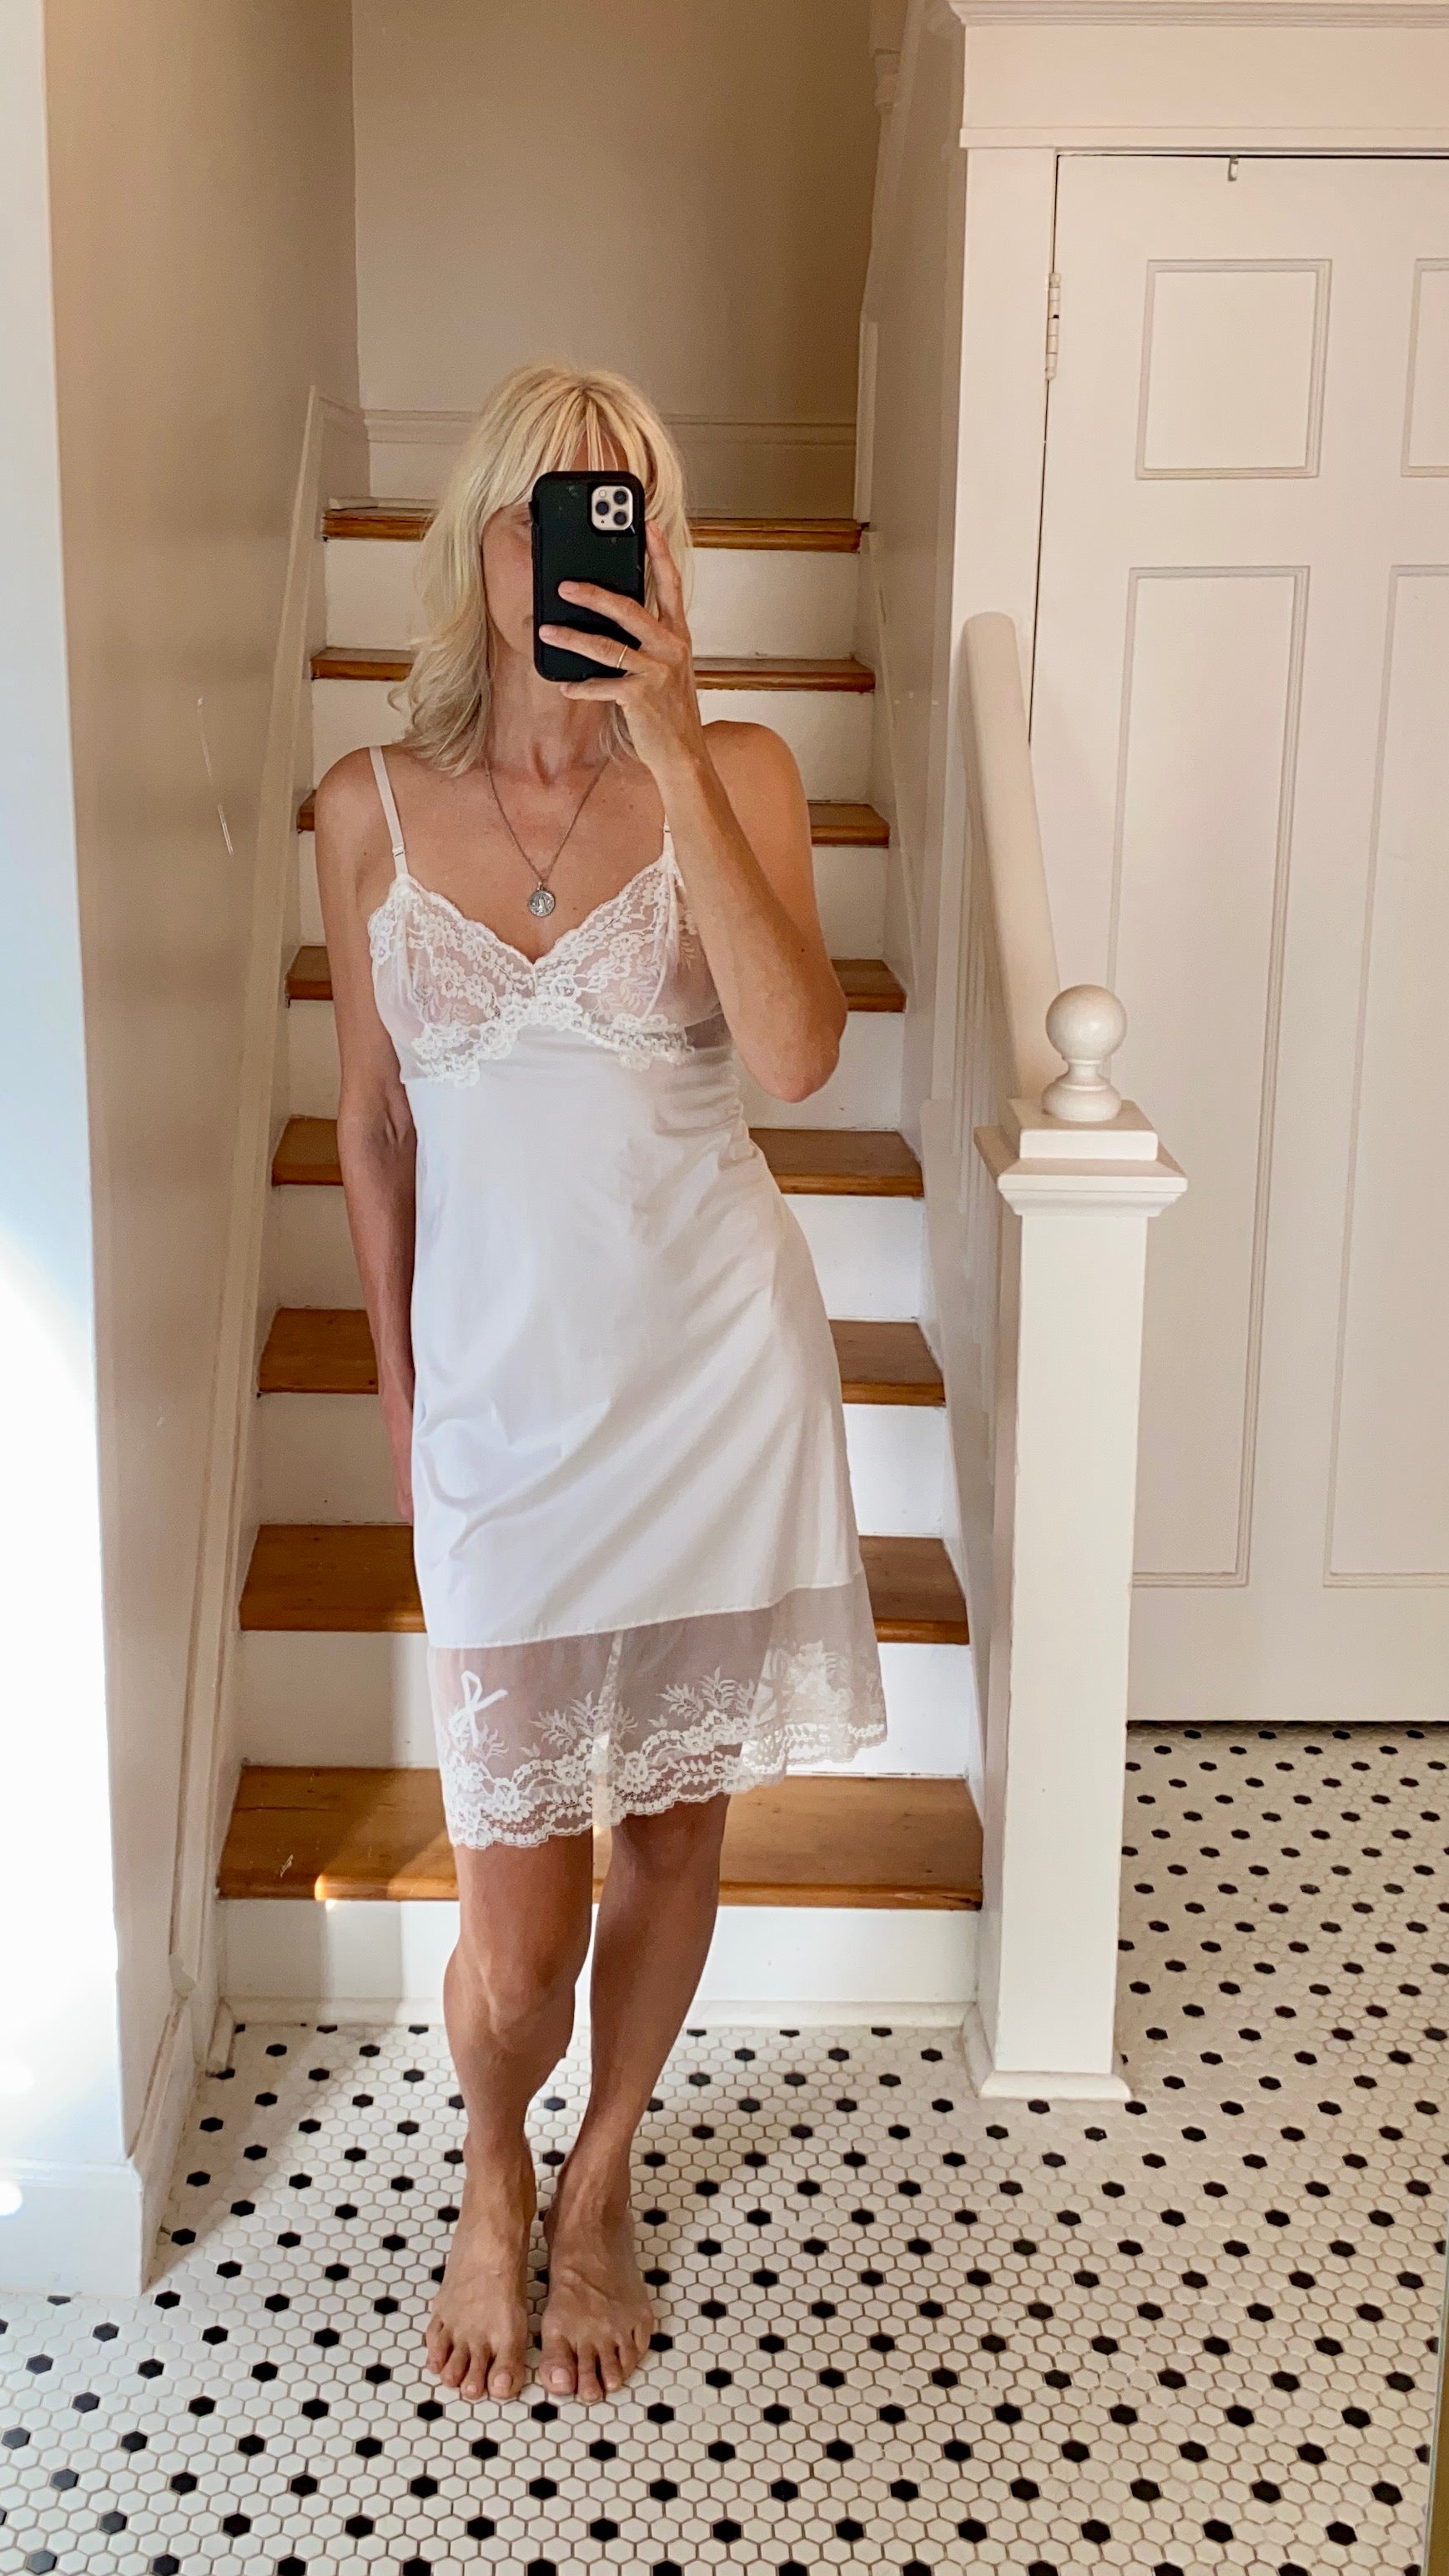 VINTAGE White Lace Slip Dress